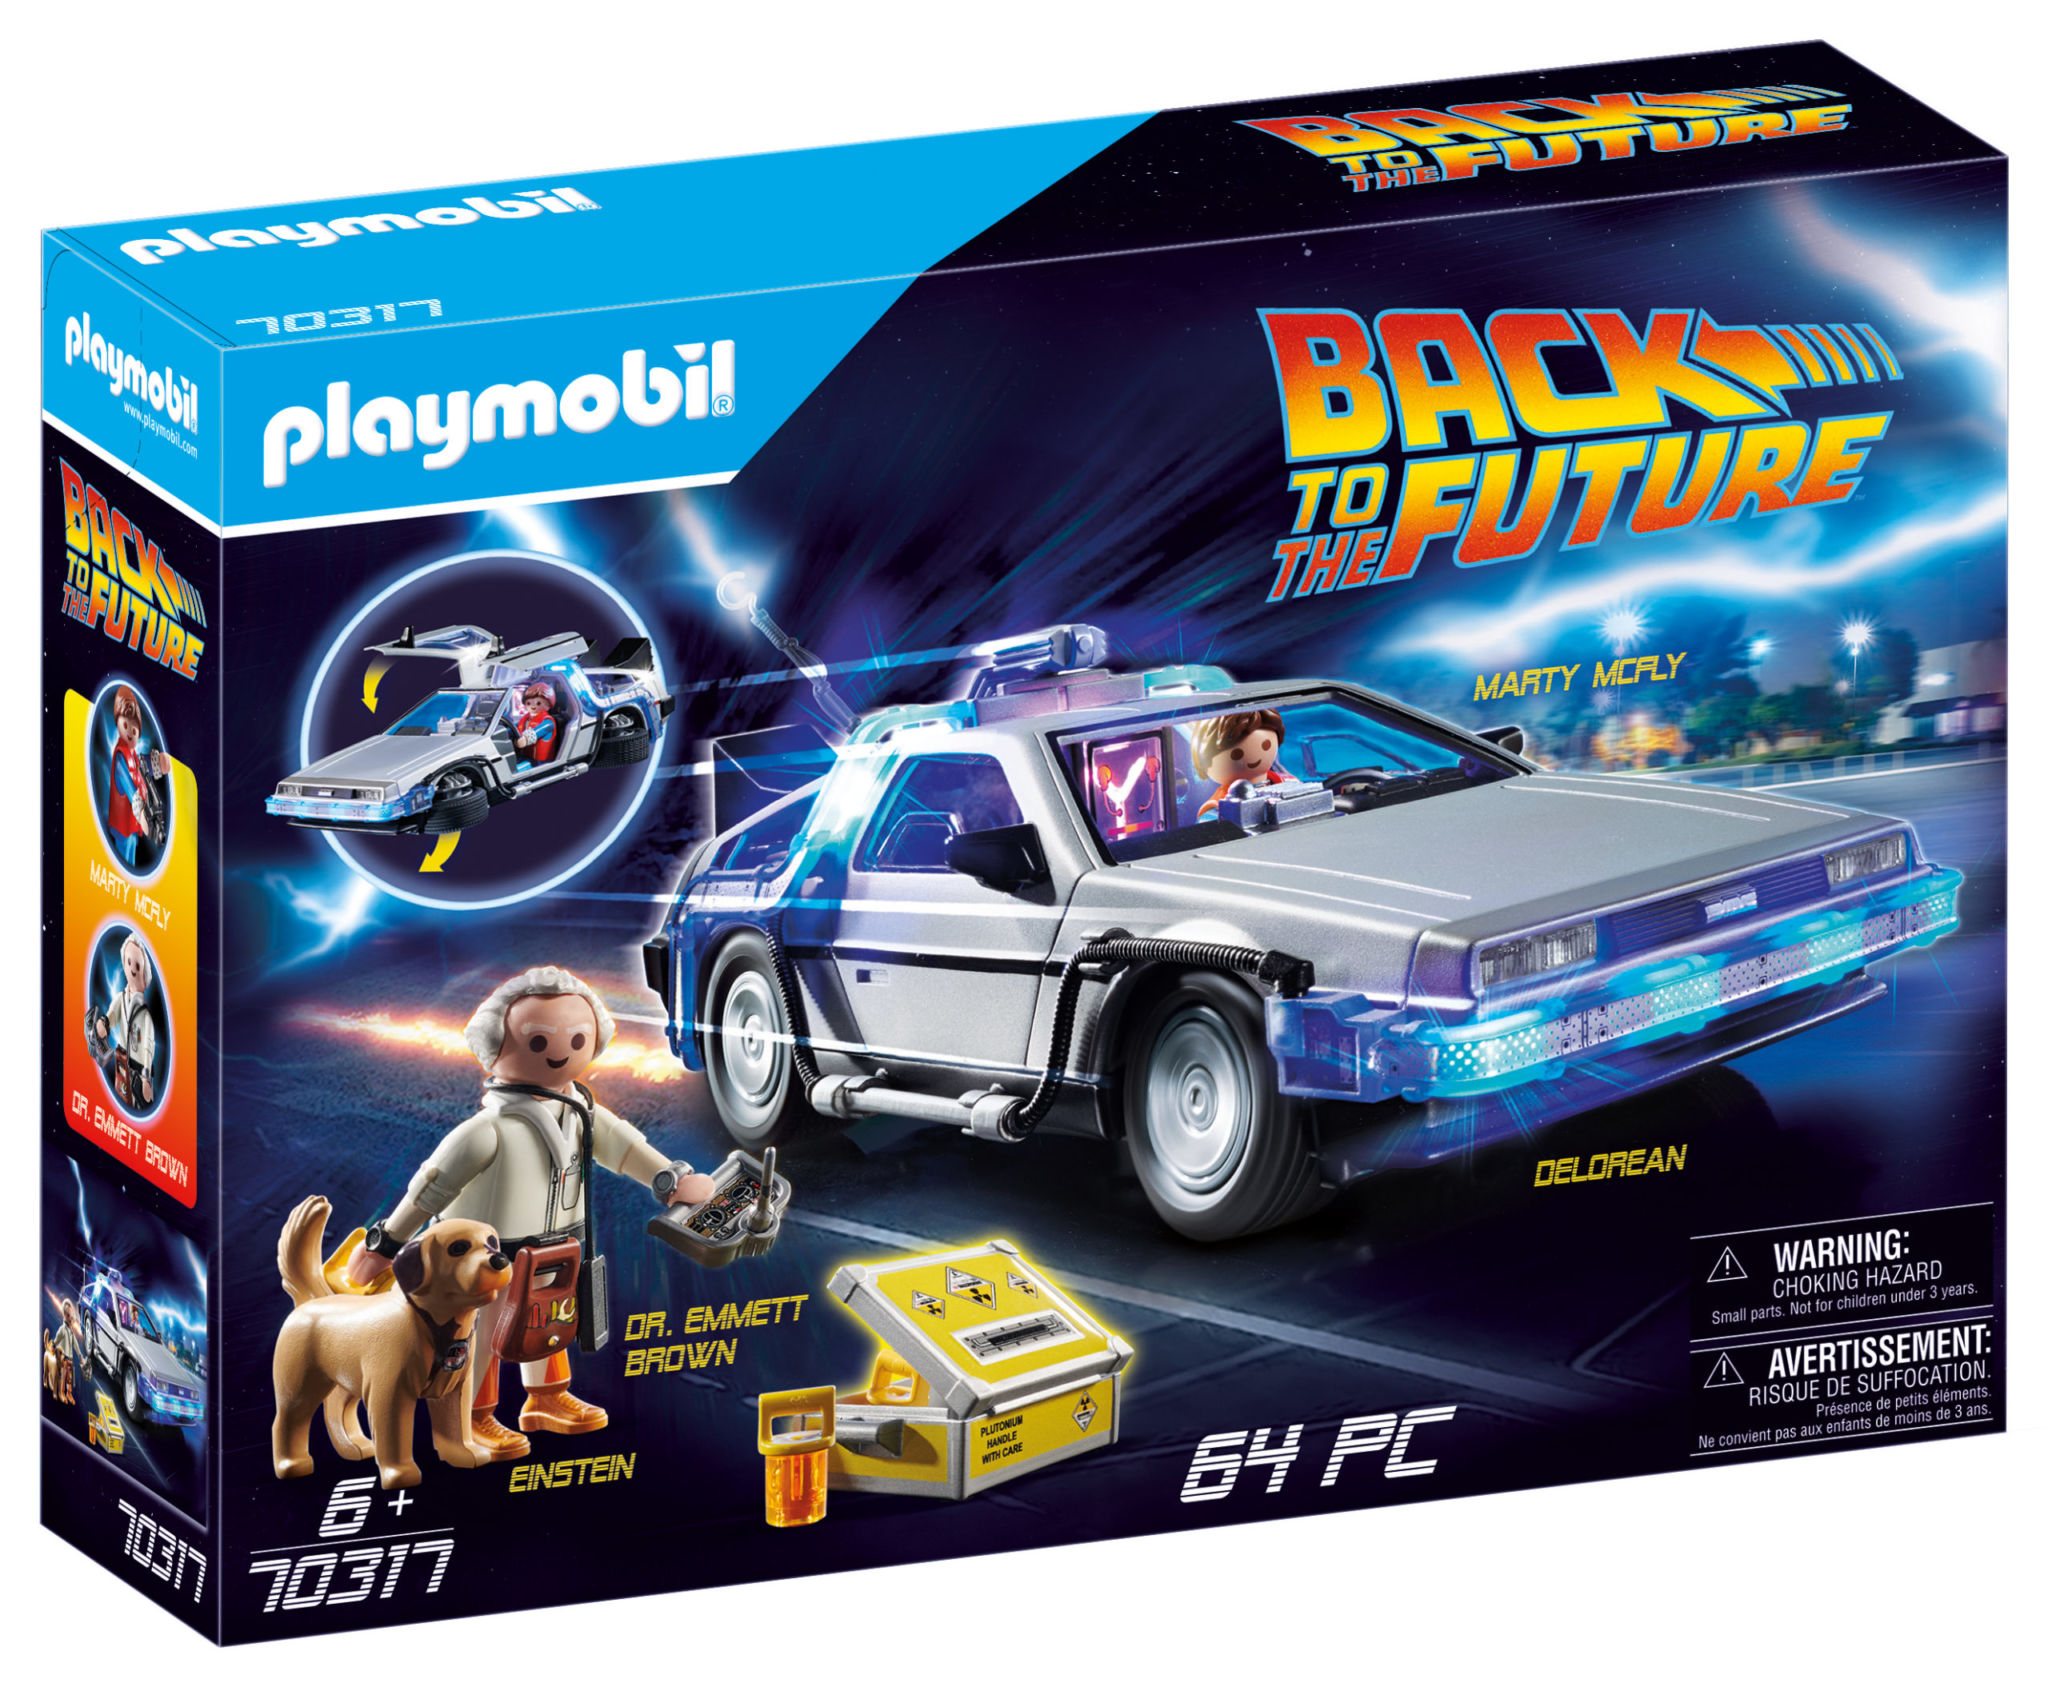 Gift Guide - BTTF Playmobil